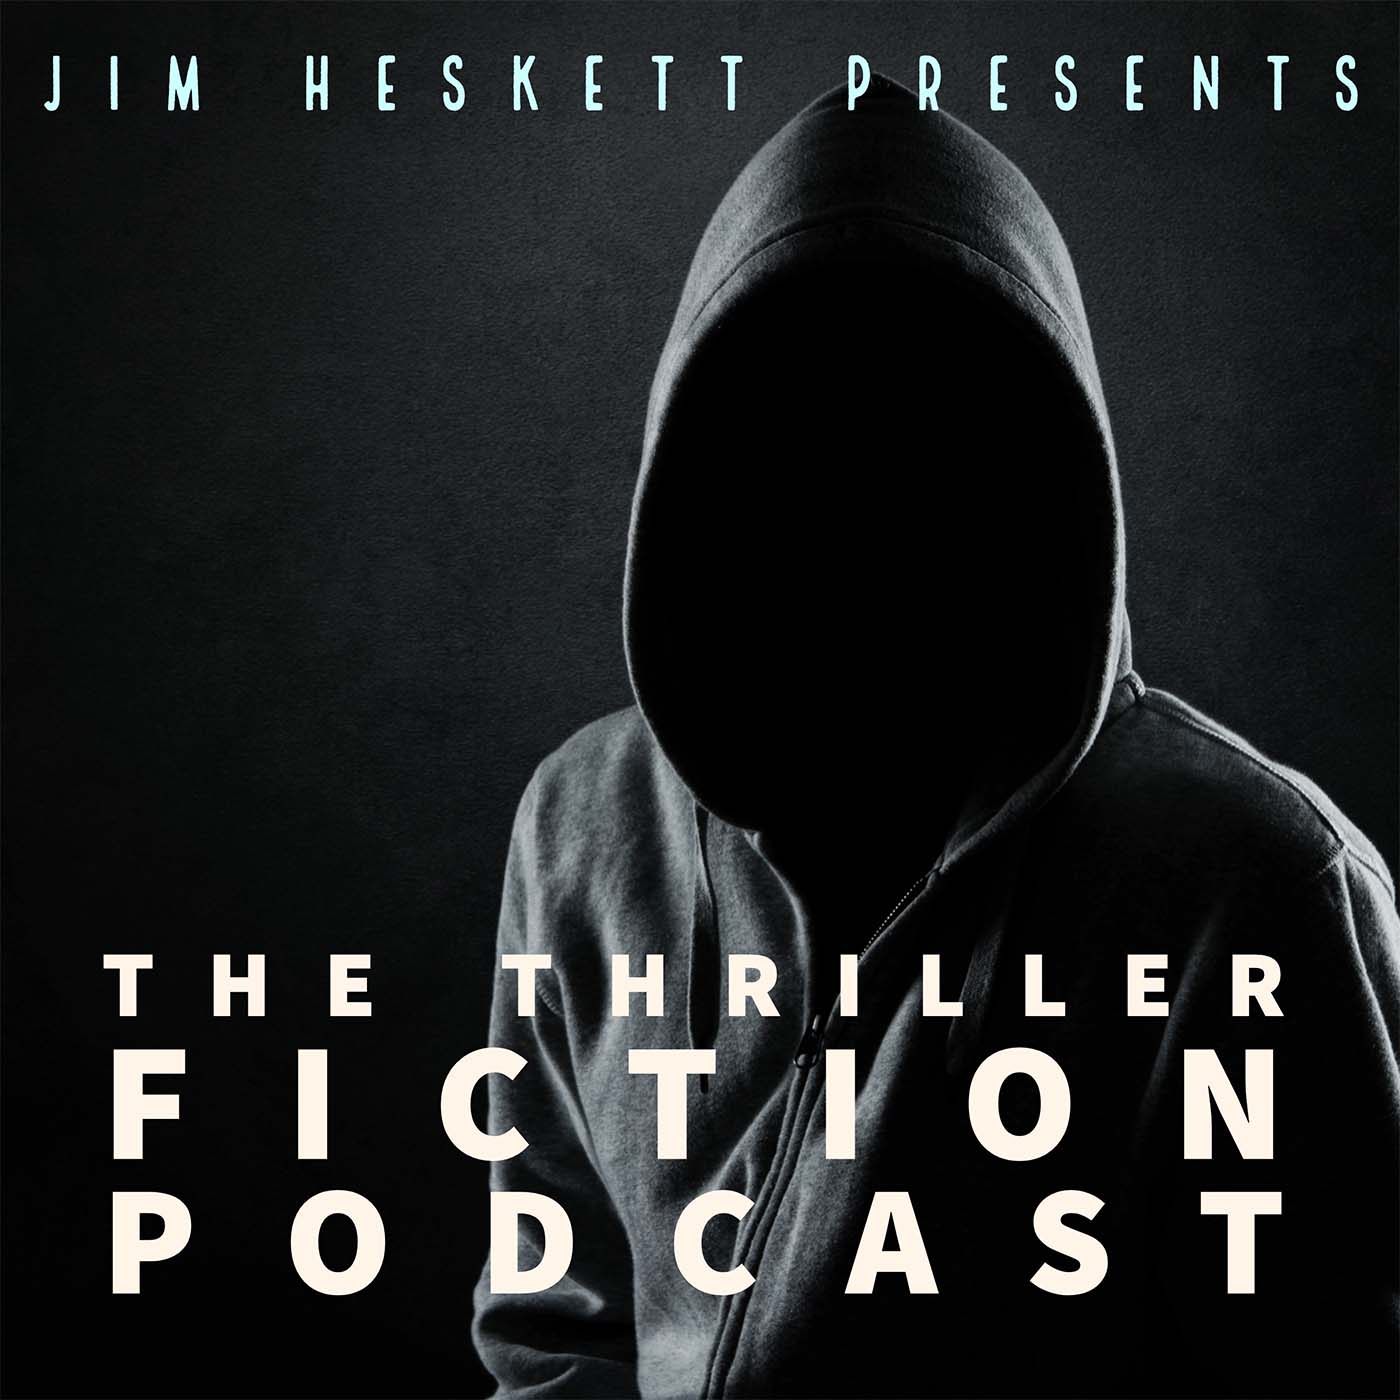 Thriller Fiction Podcast